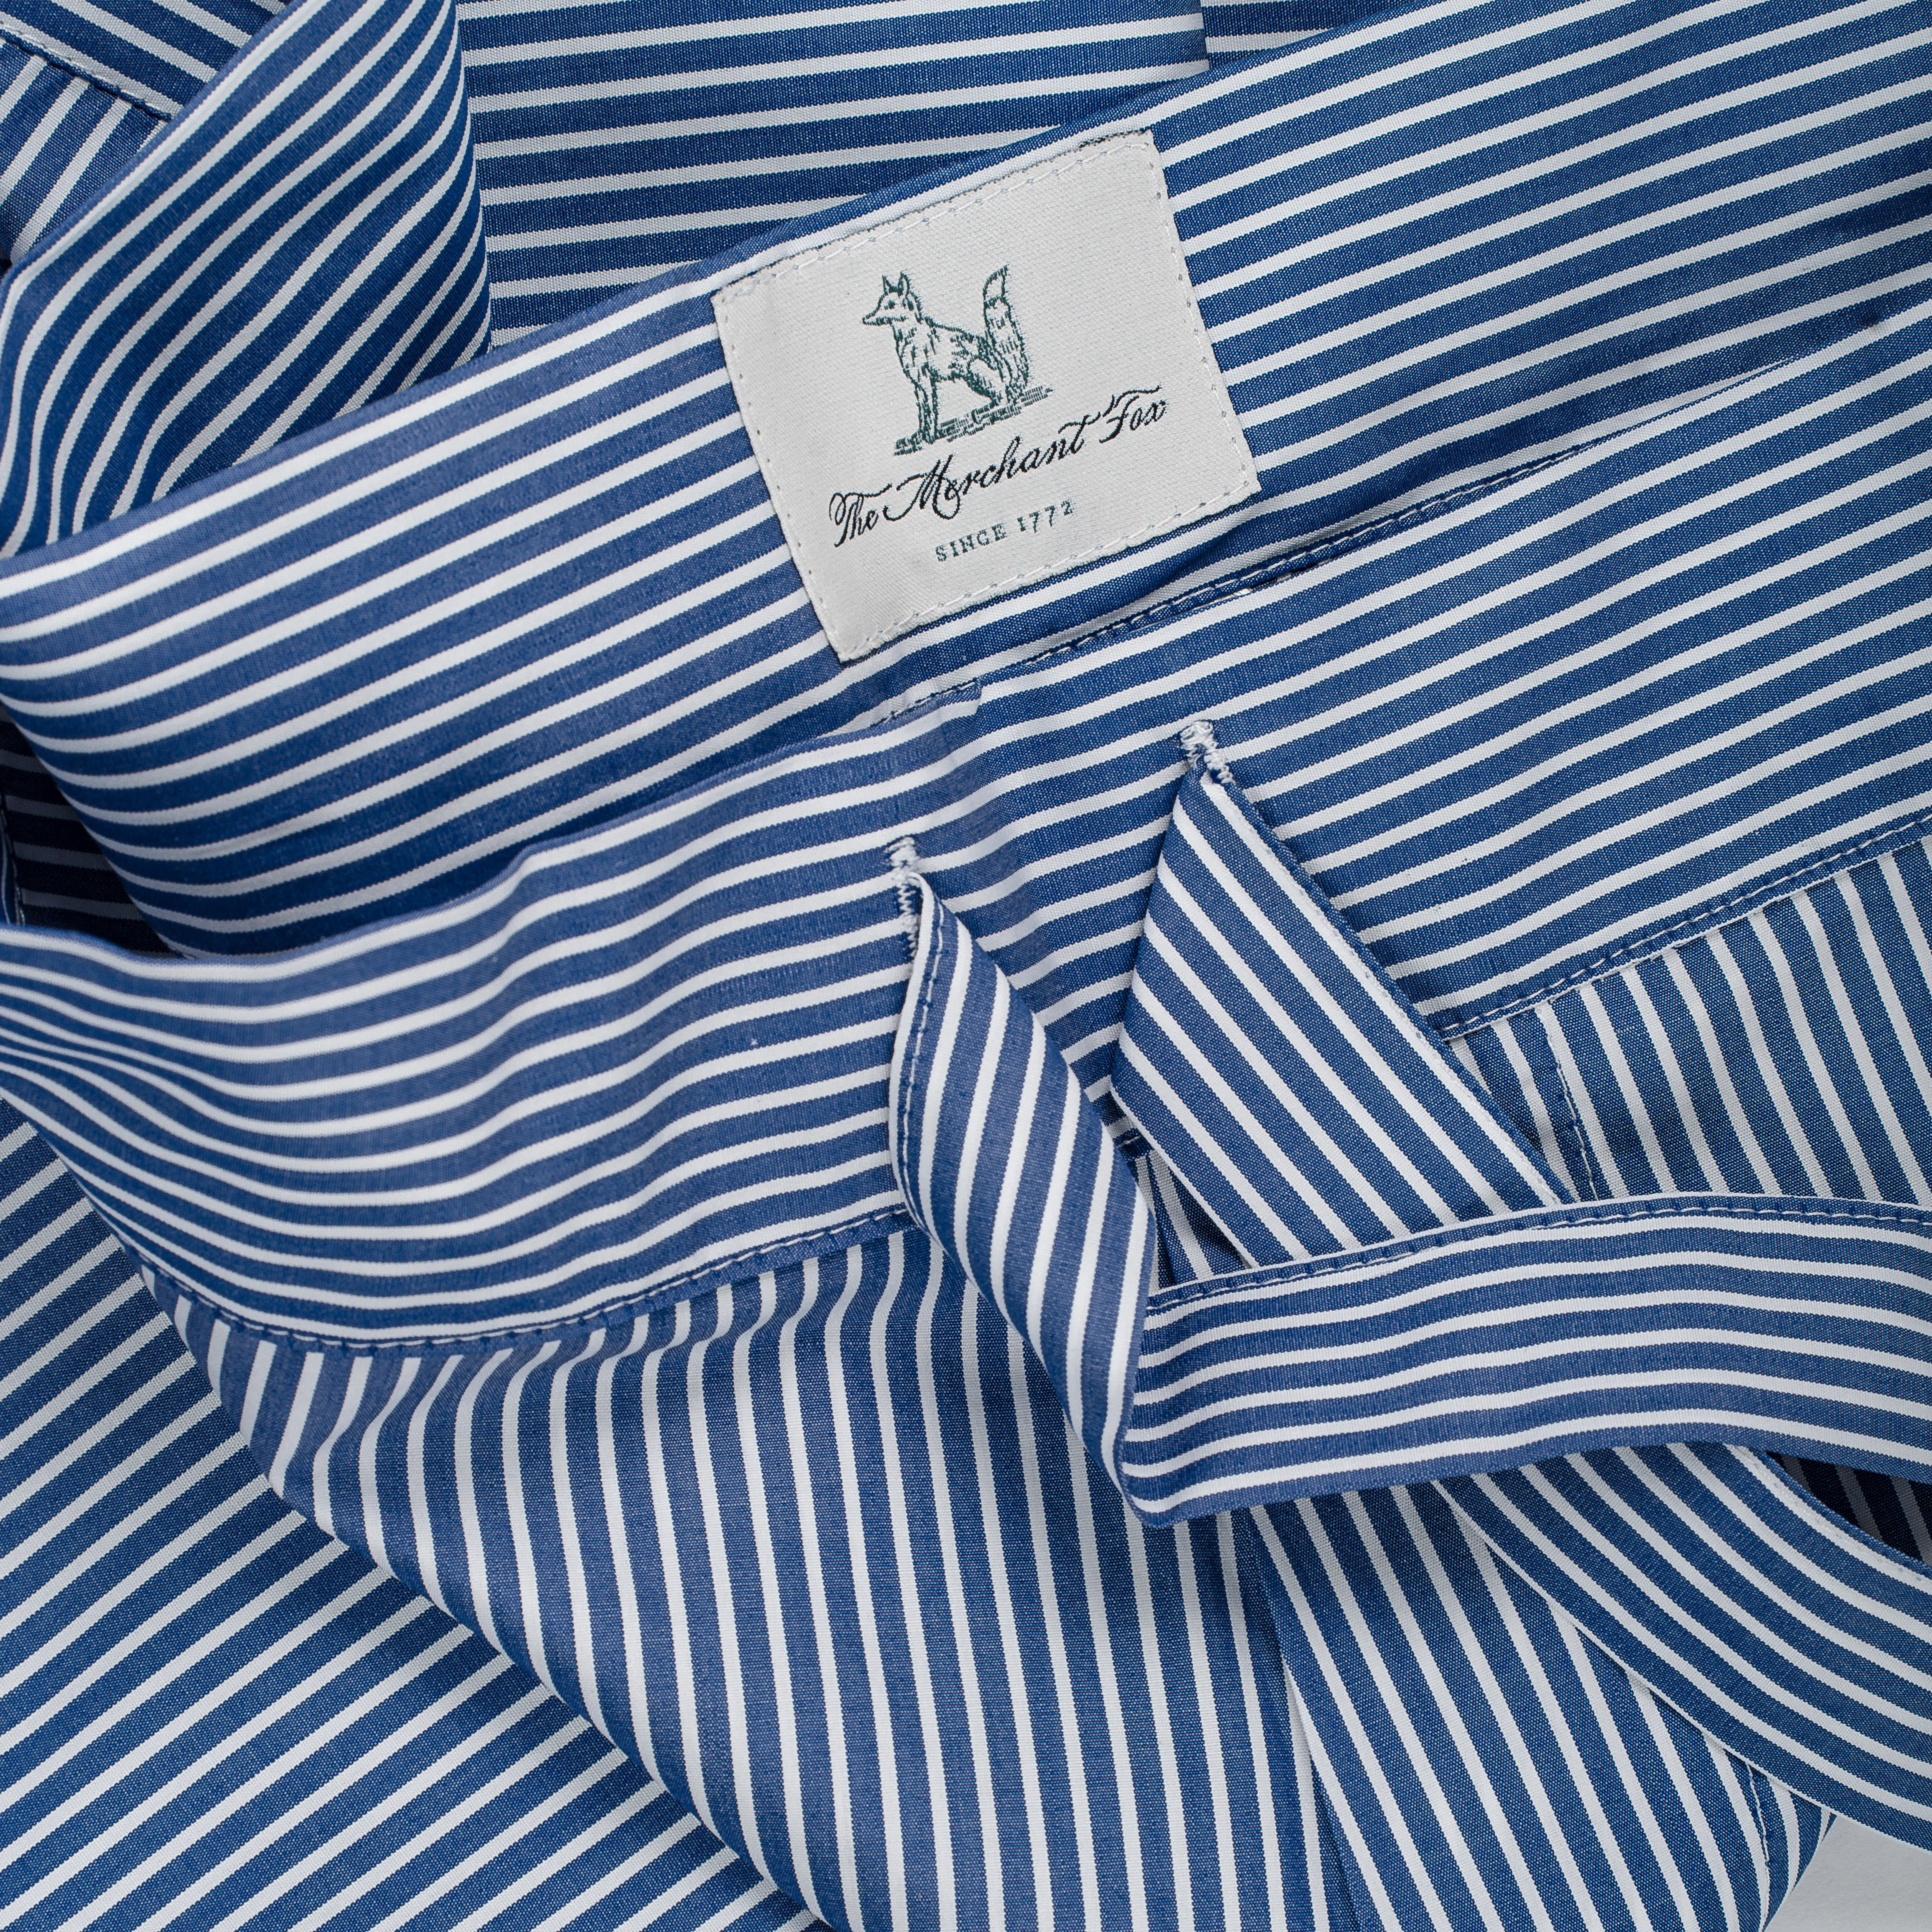 The Merchant Fox Thin Striped Pyjamas in Navy & White